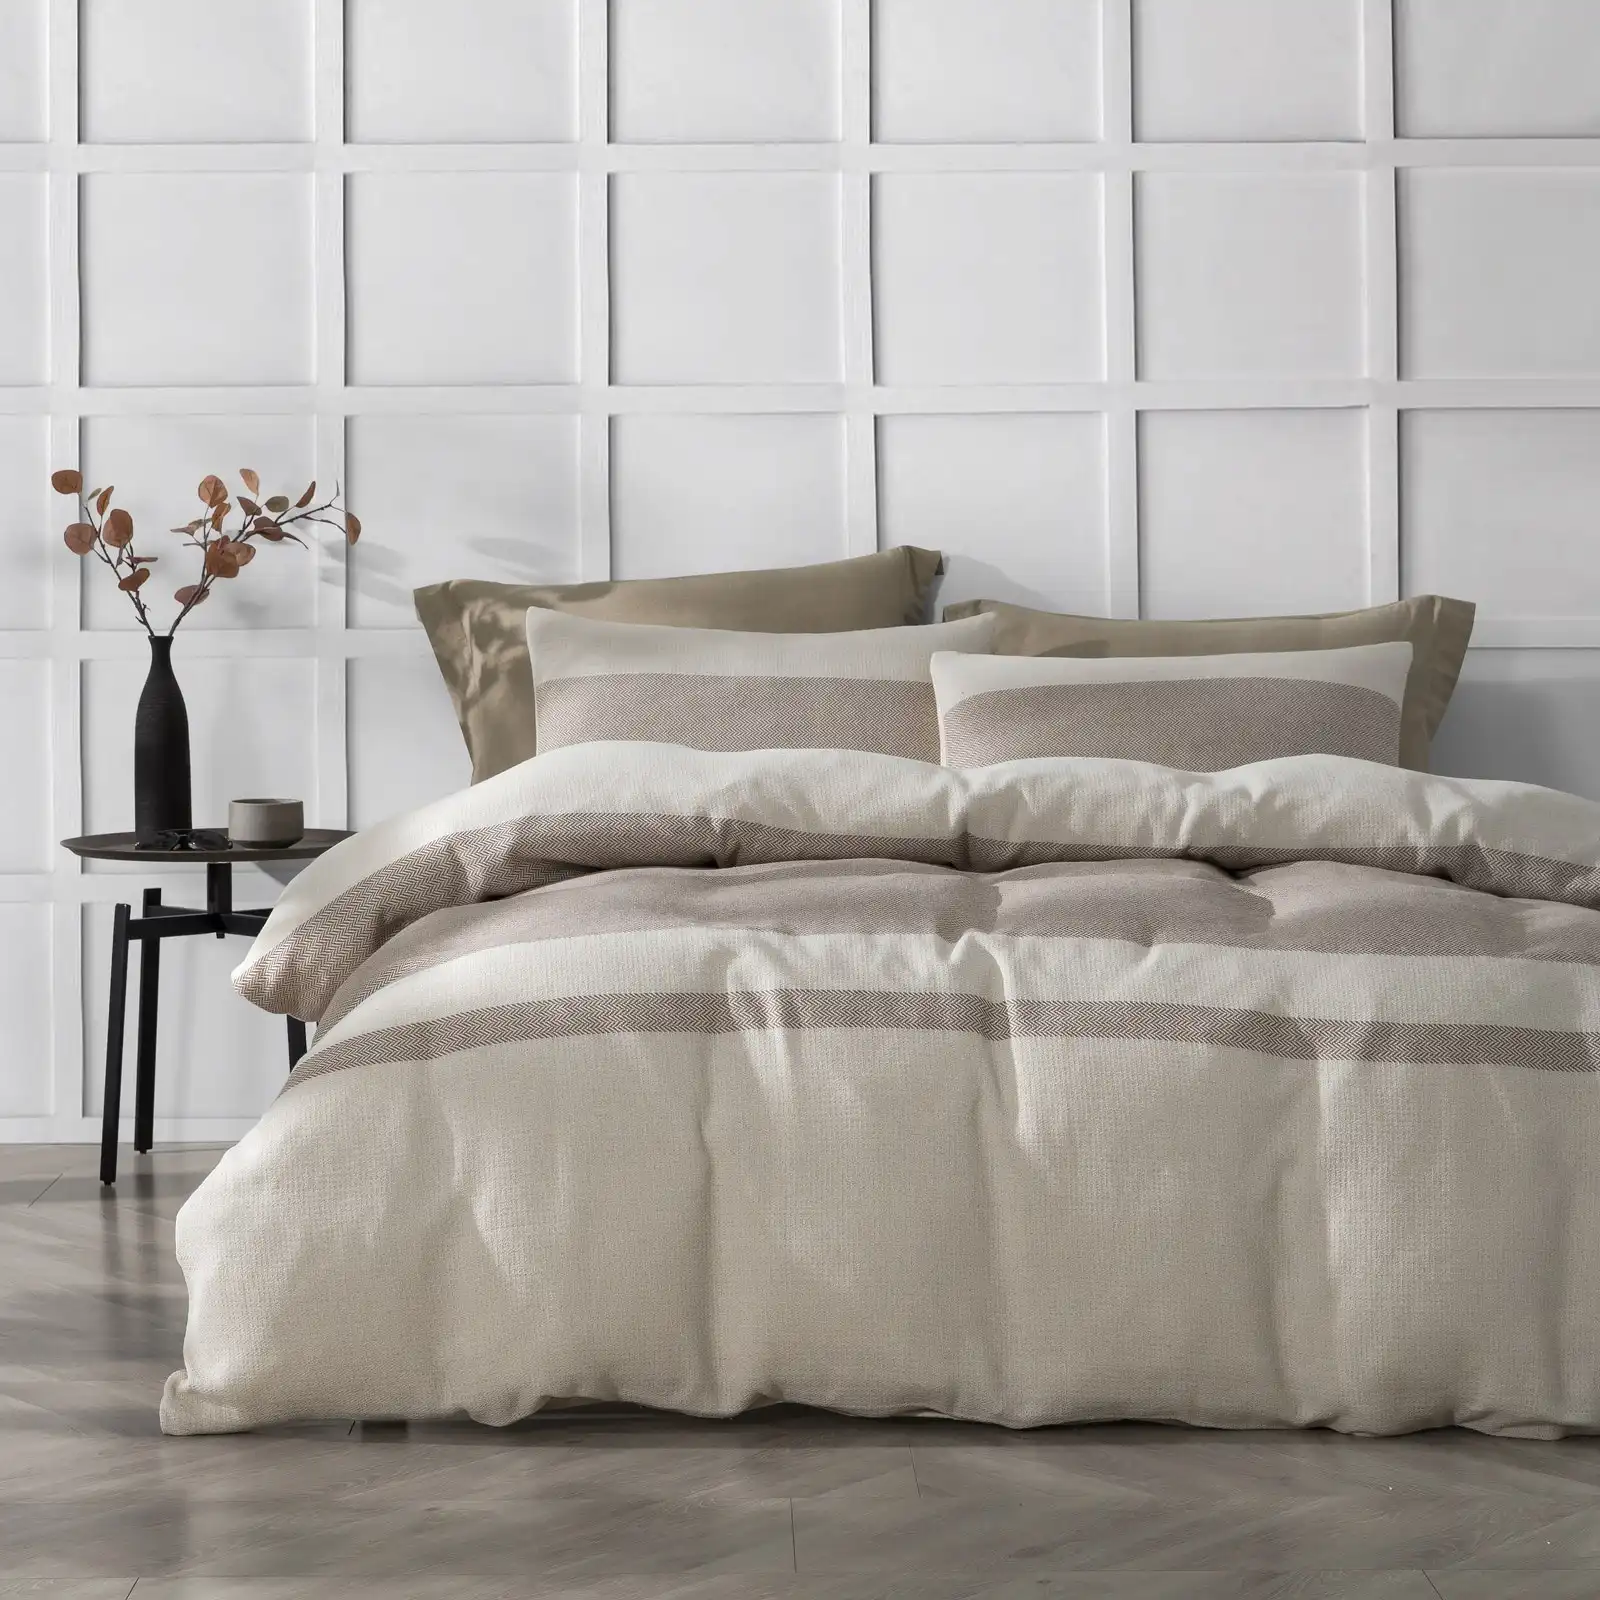 Dreamaker Herringbone 100% Cotton Quilt Cover Set Natural - Cream Double Bed